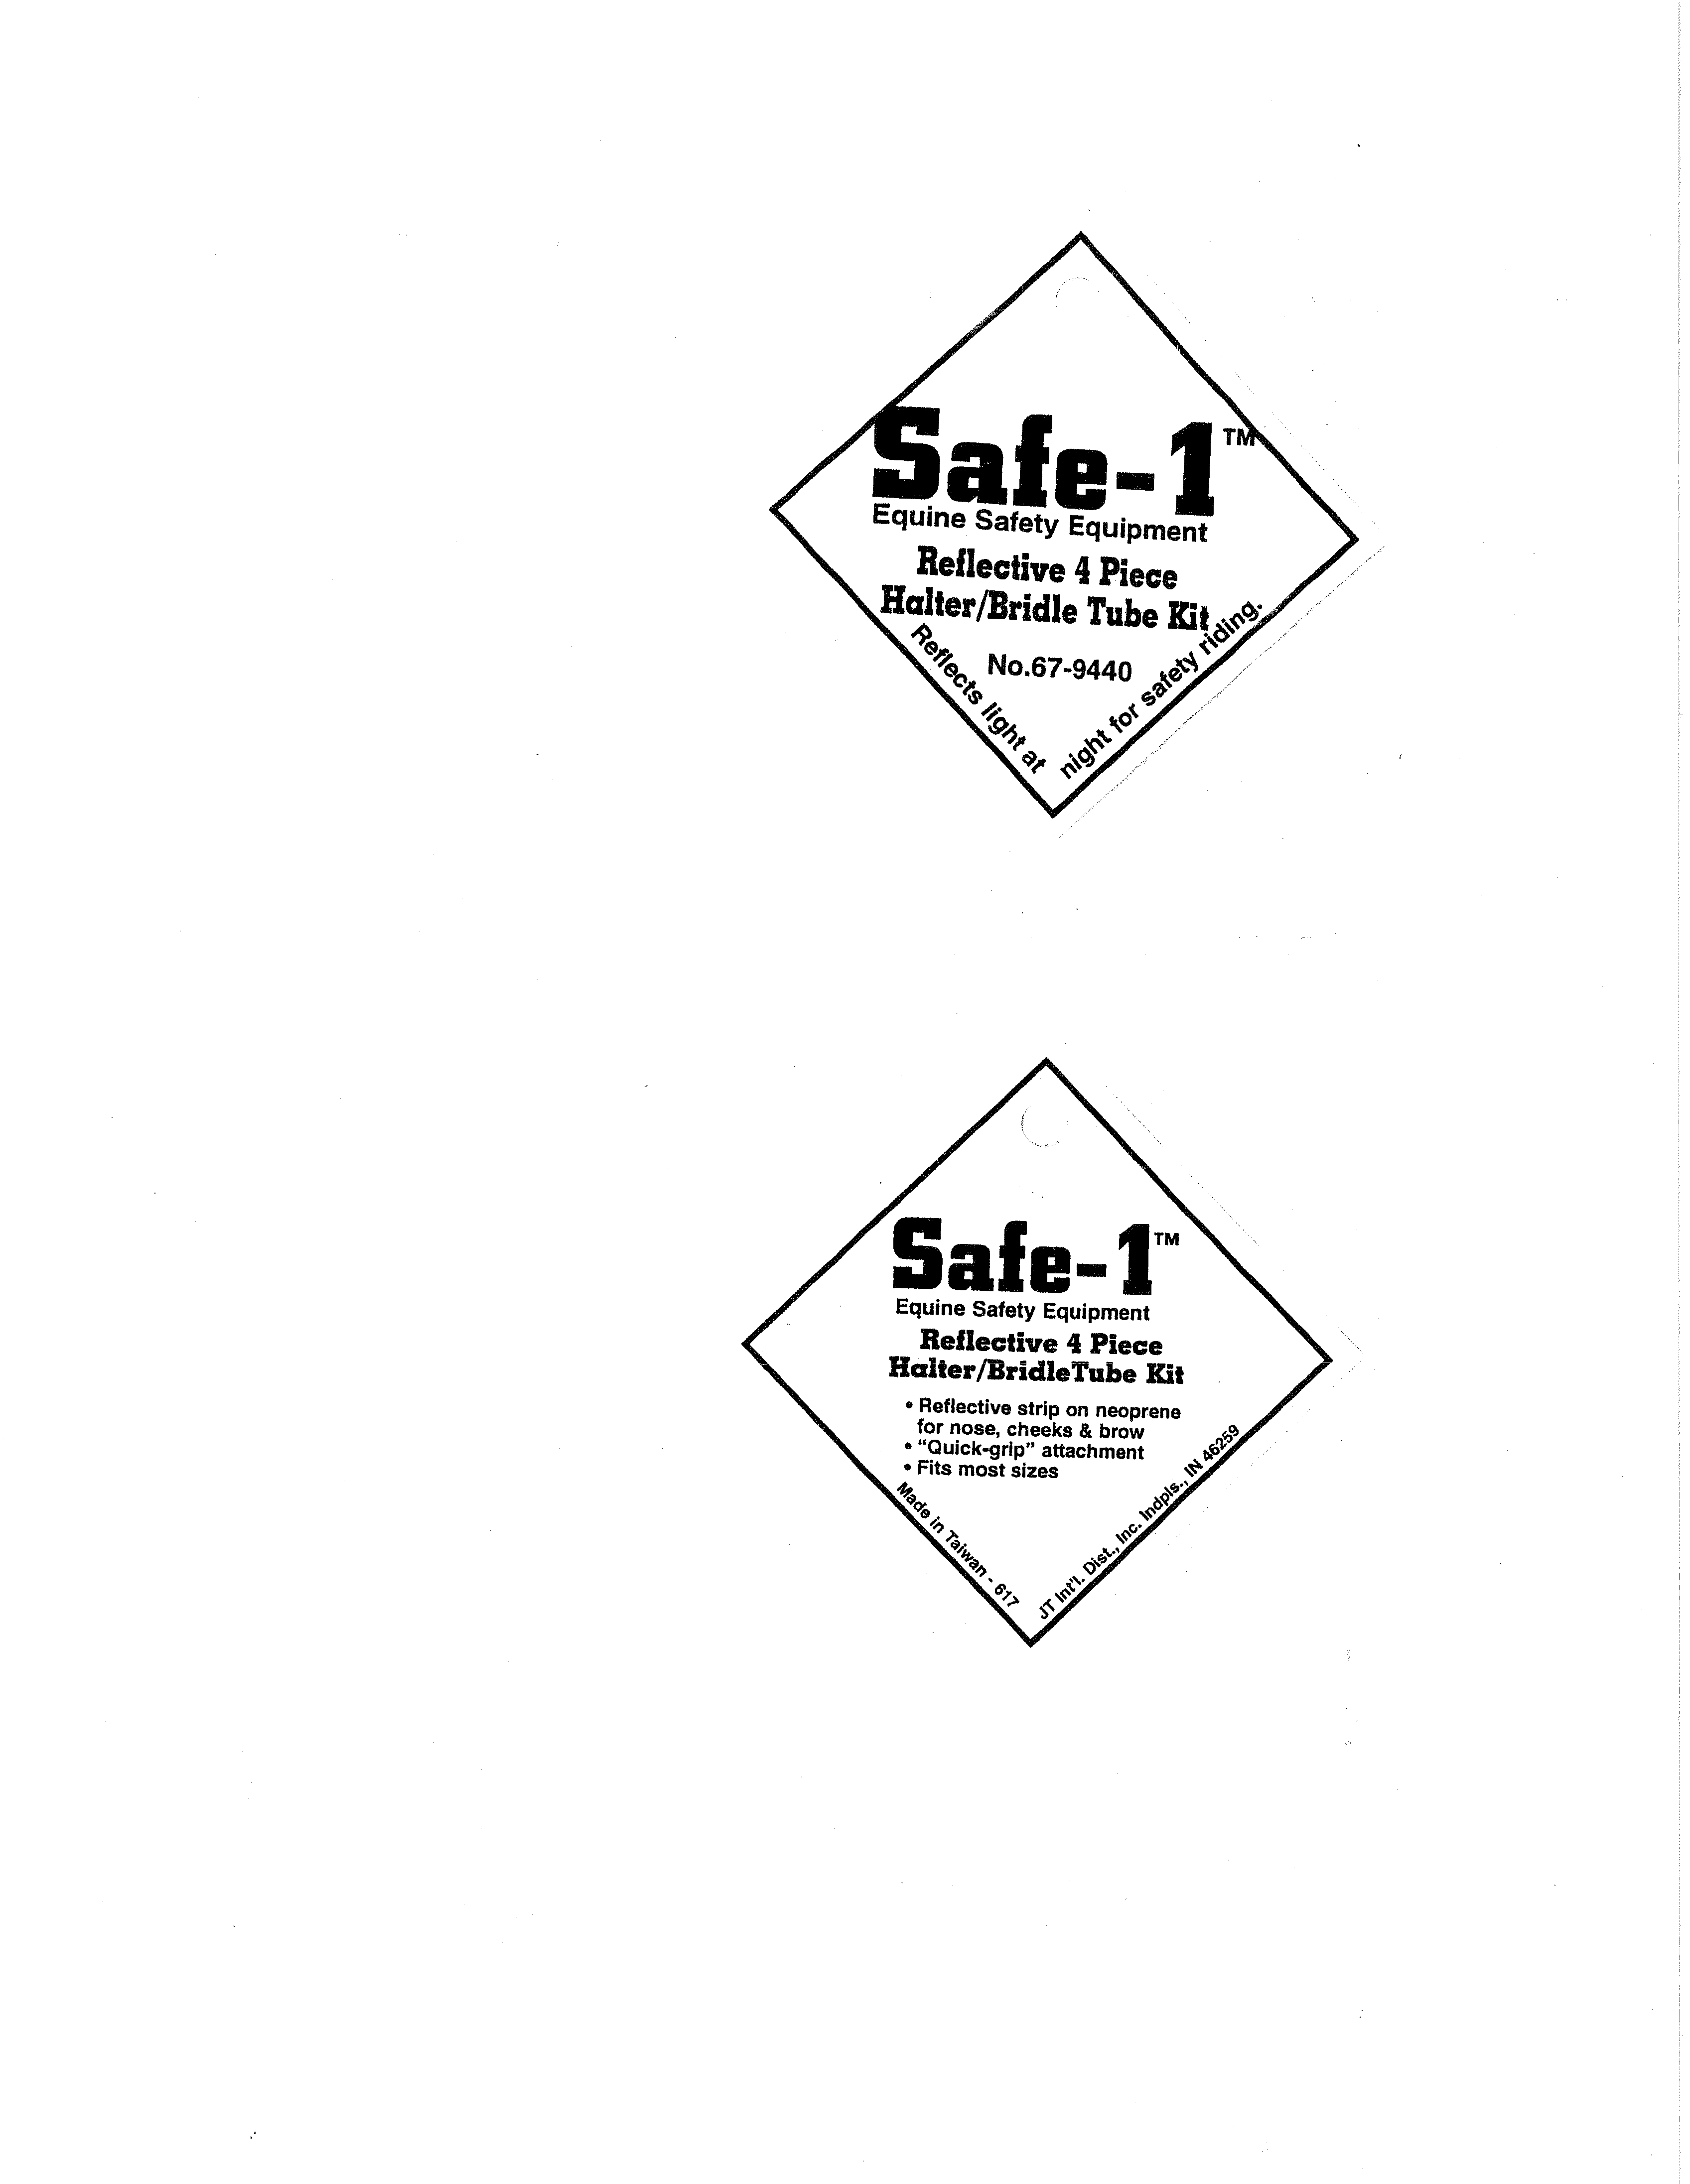  SAFE-1 EQUINE SAFETY EQUIPMENT